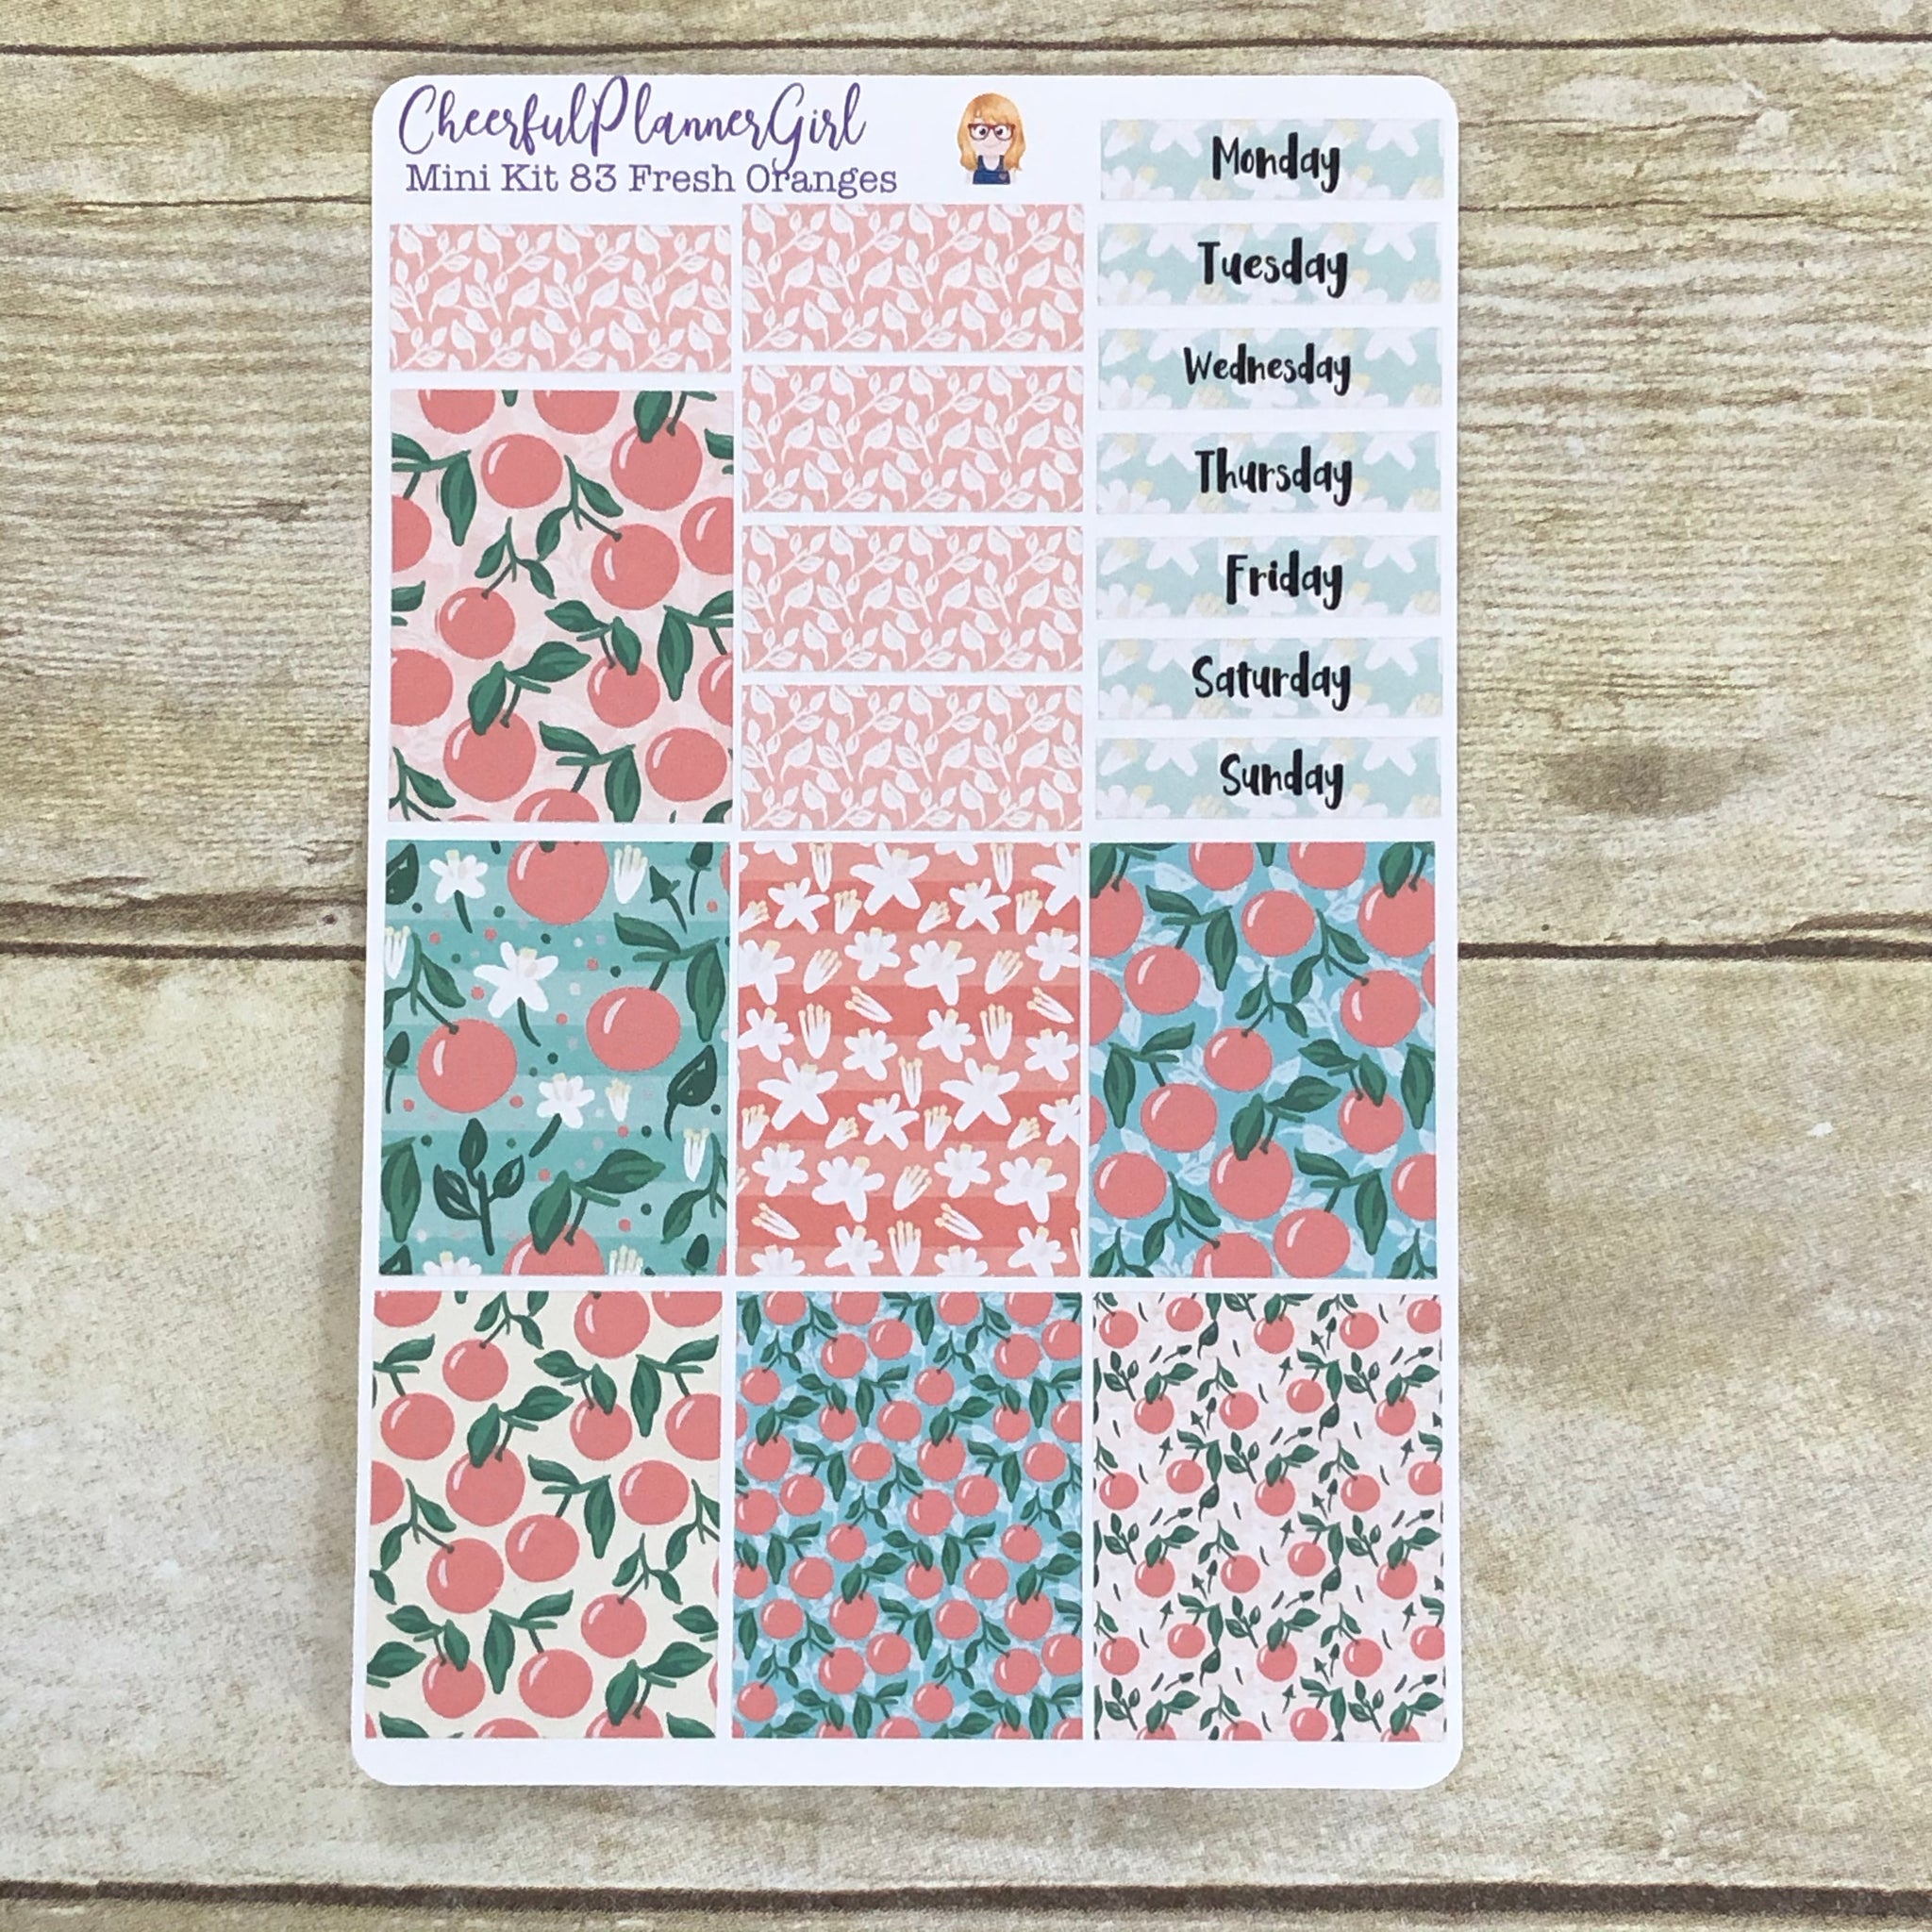 Fresh Oranges Mini Kit Weekly Layout Planner Stickers